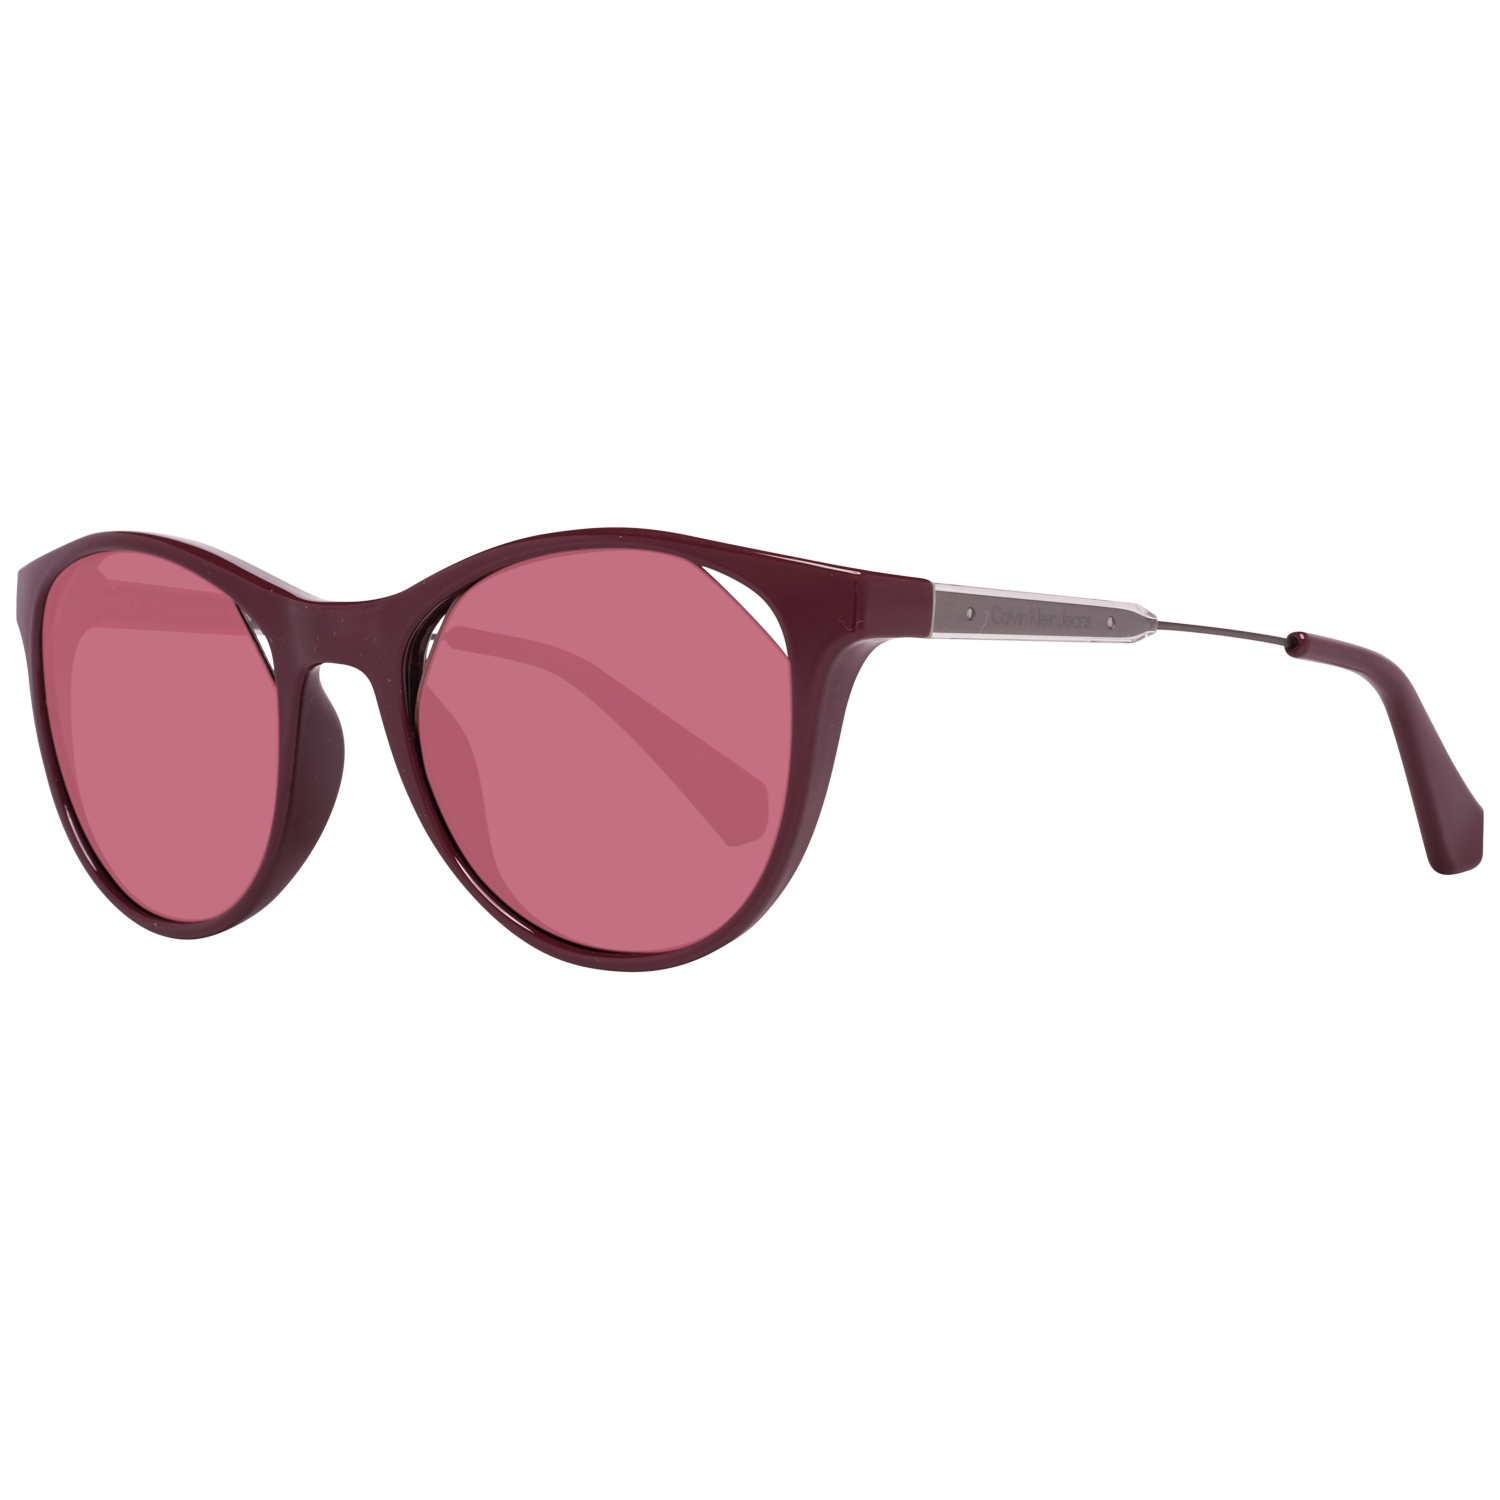 Calvin Klein Sunglasses CKJ510S 617 52